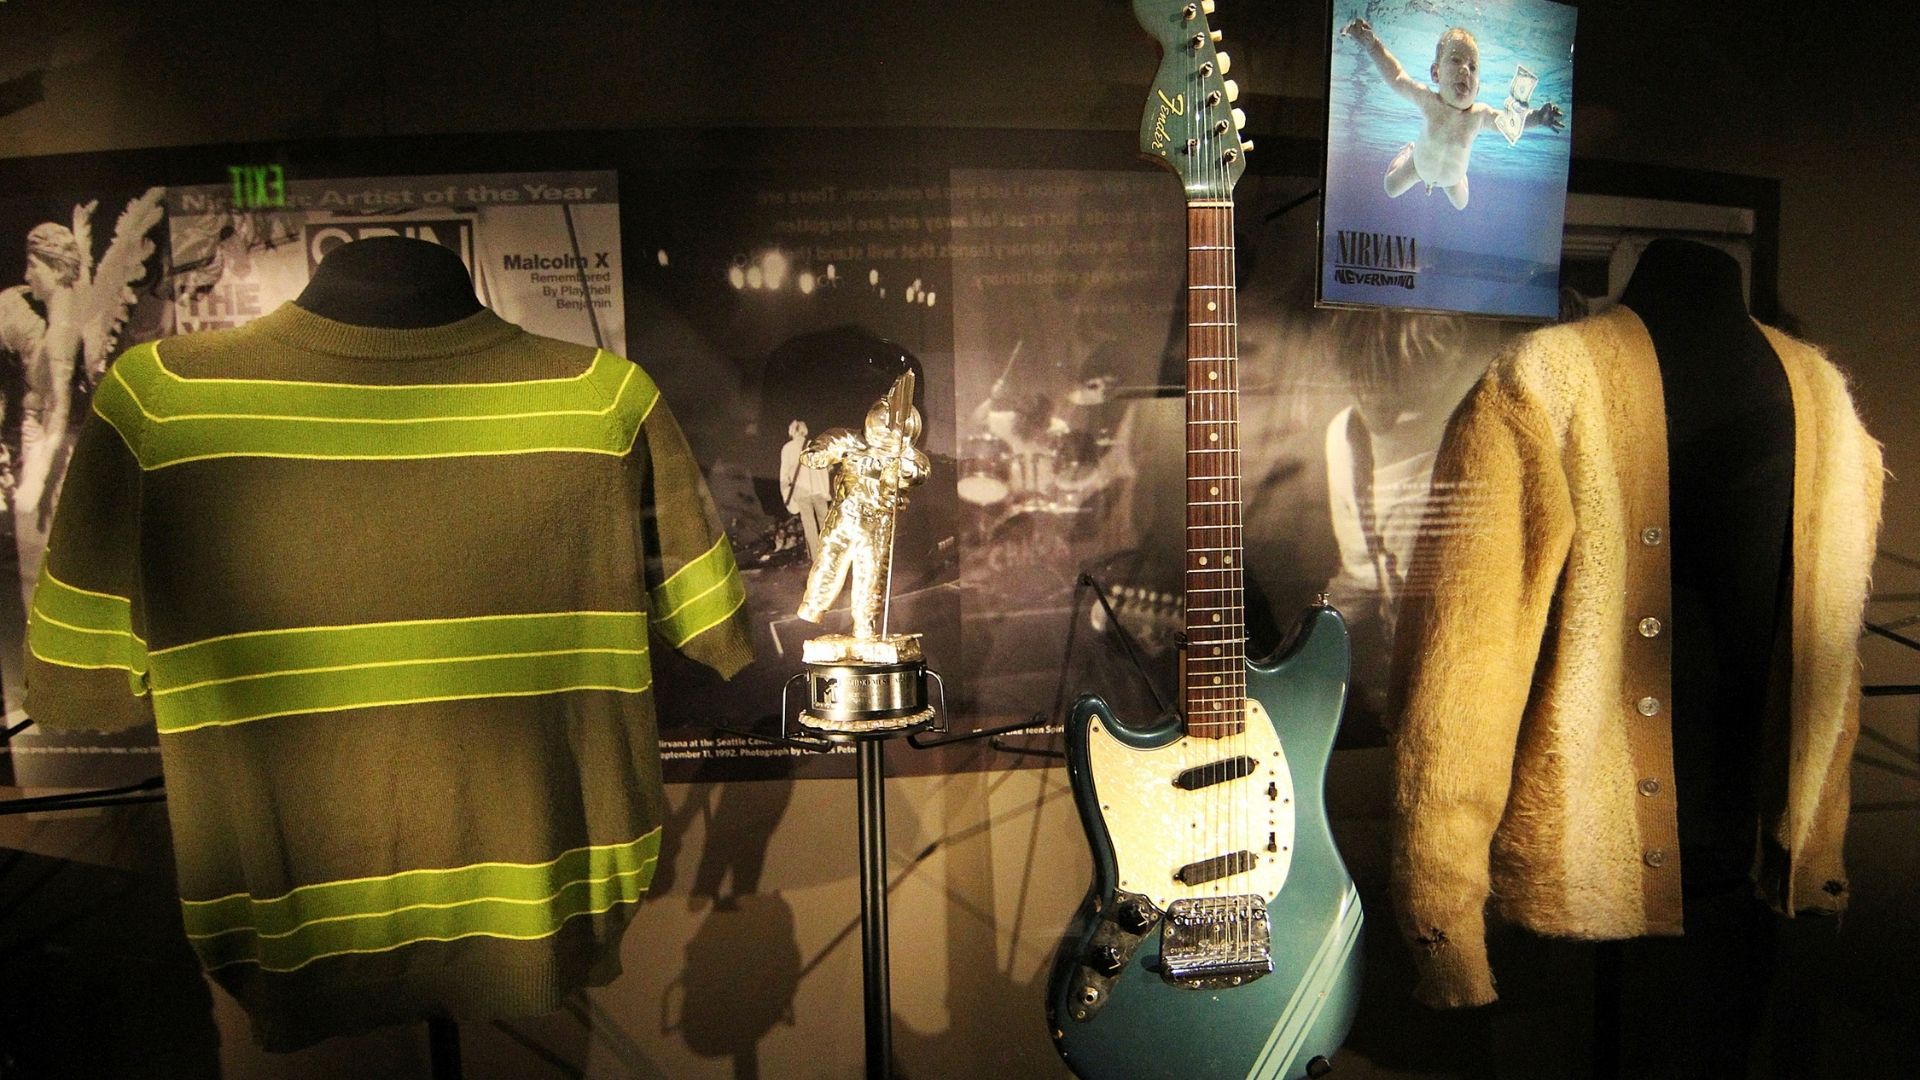 La Fender Mustang, la emblemática guitarra de Kurt Cobain de "Smells Like Teen Spirit", será subastada